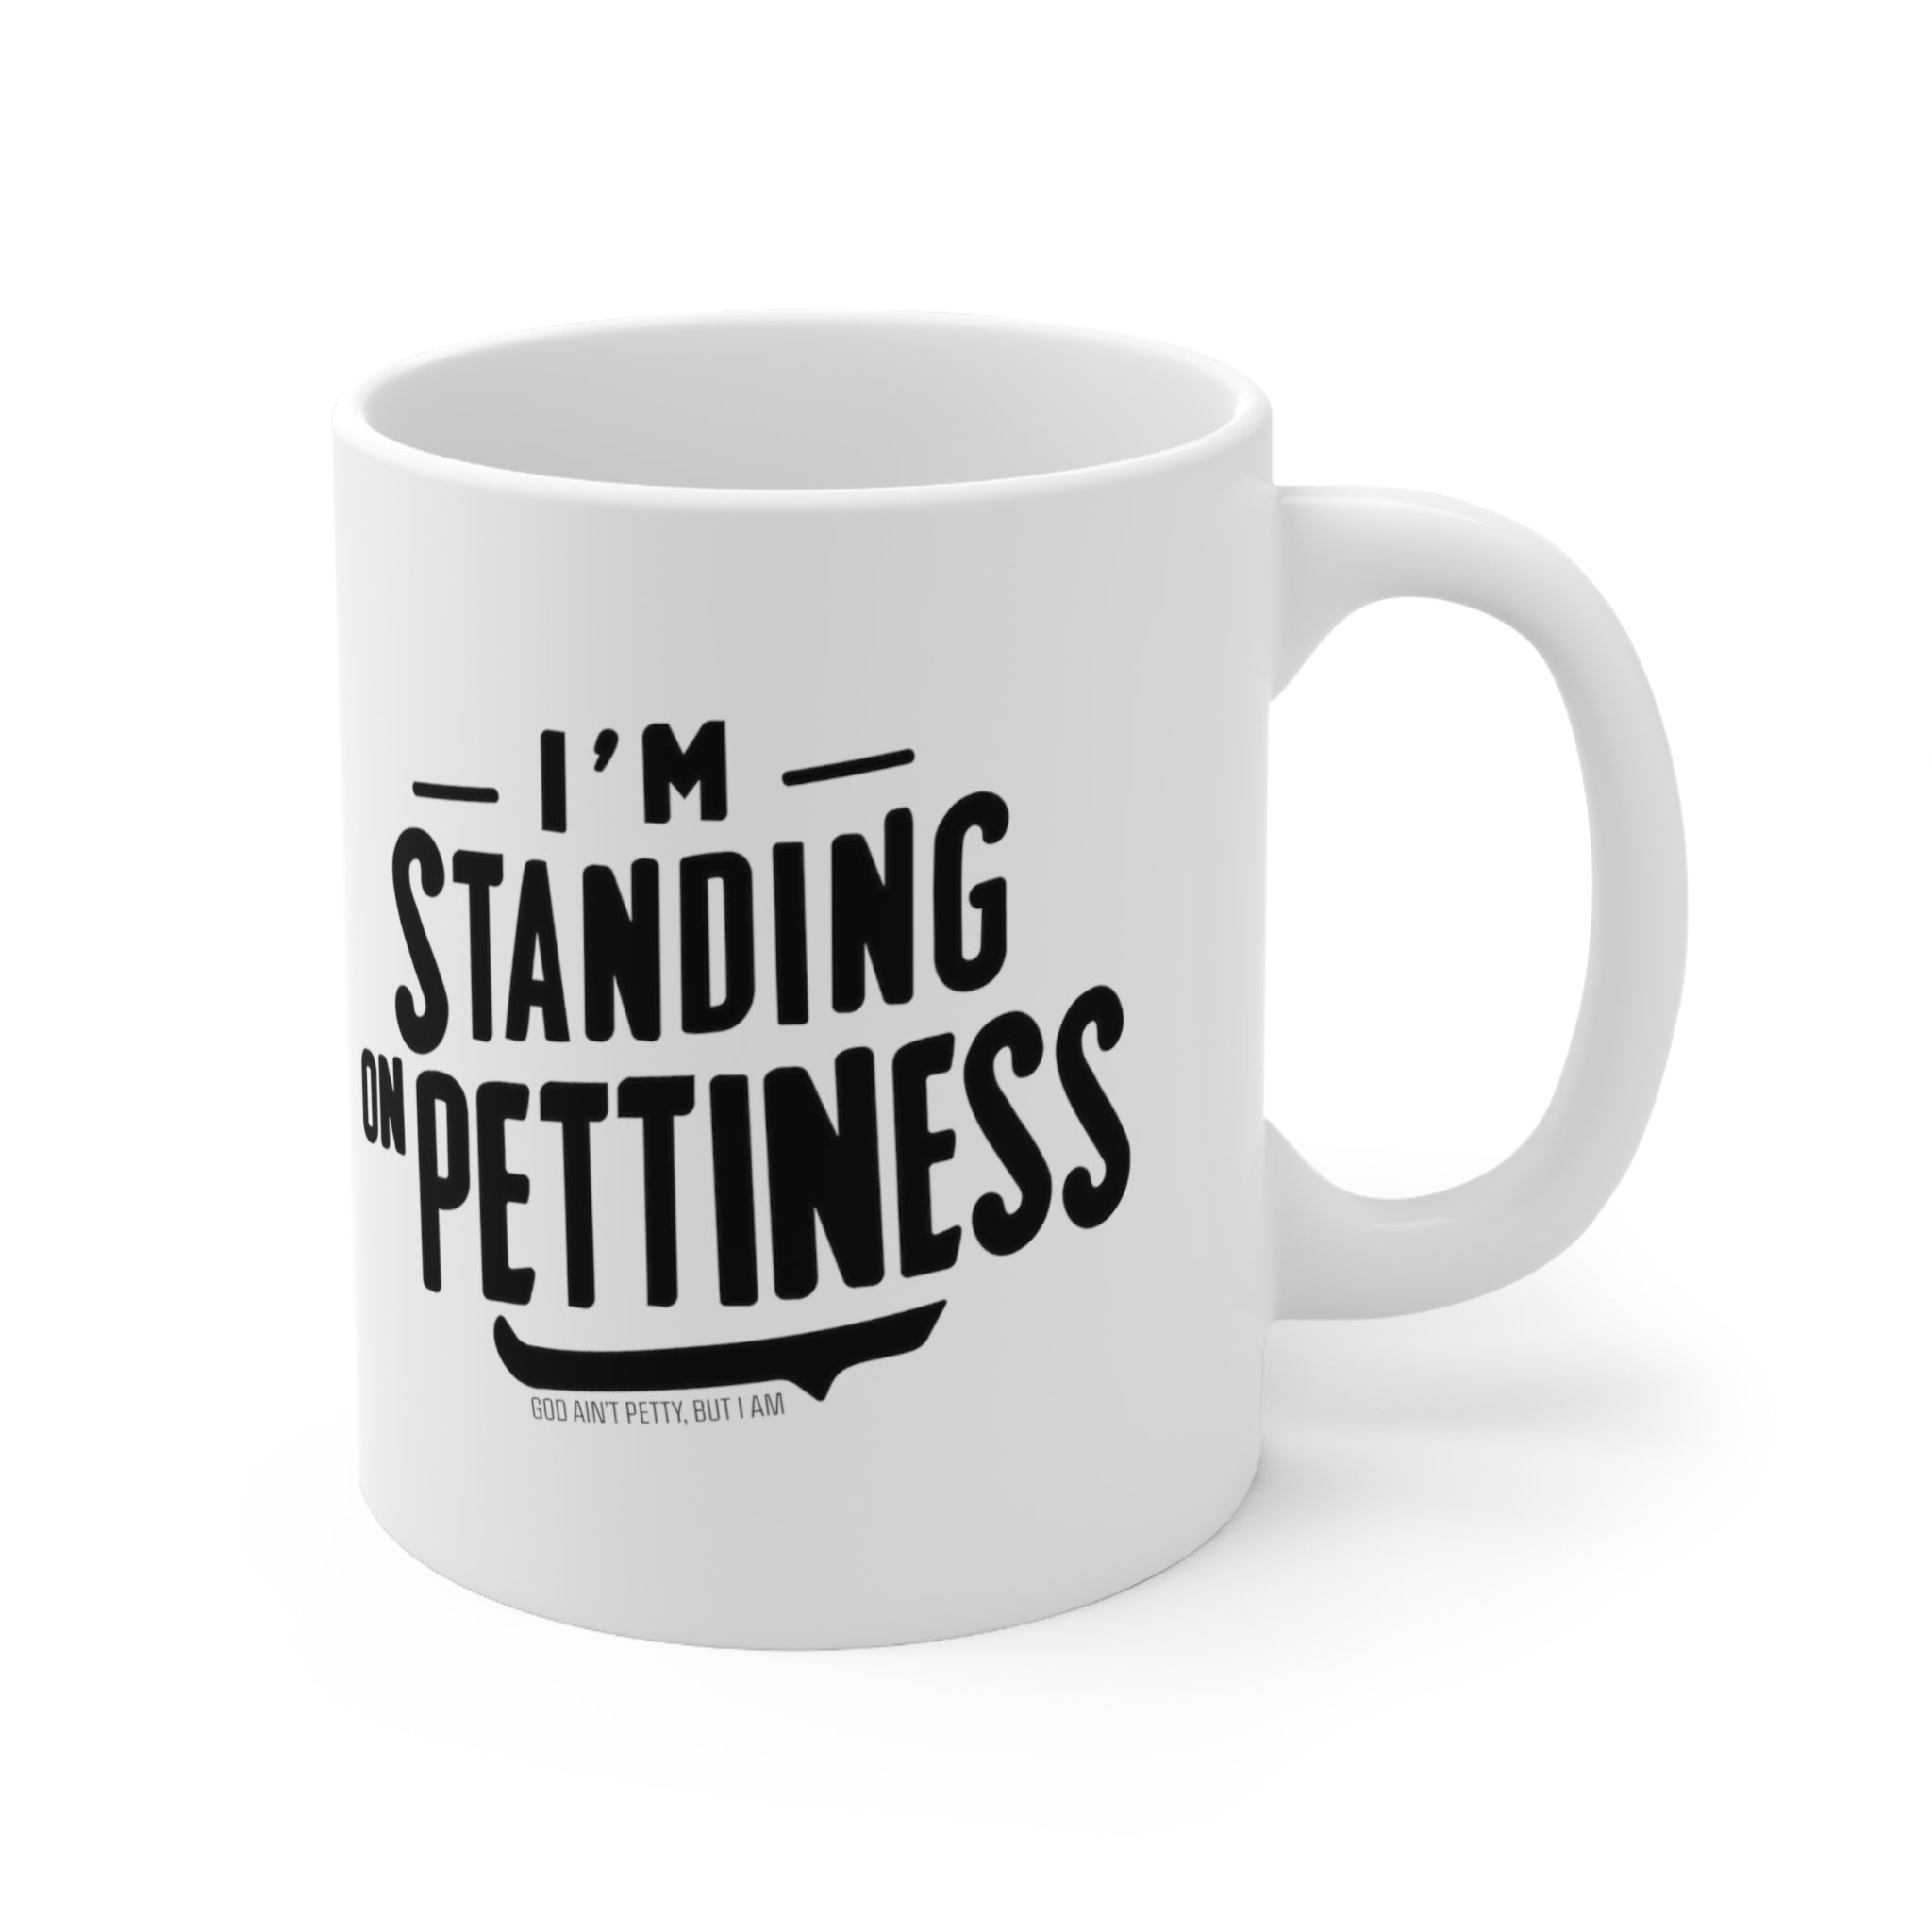 I'm Standing on Pettiness Mug 11oz (White & Black )-Mug-The Original God Ain't Petty But I Am